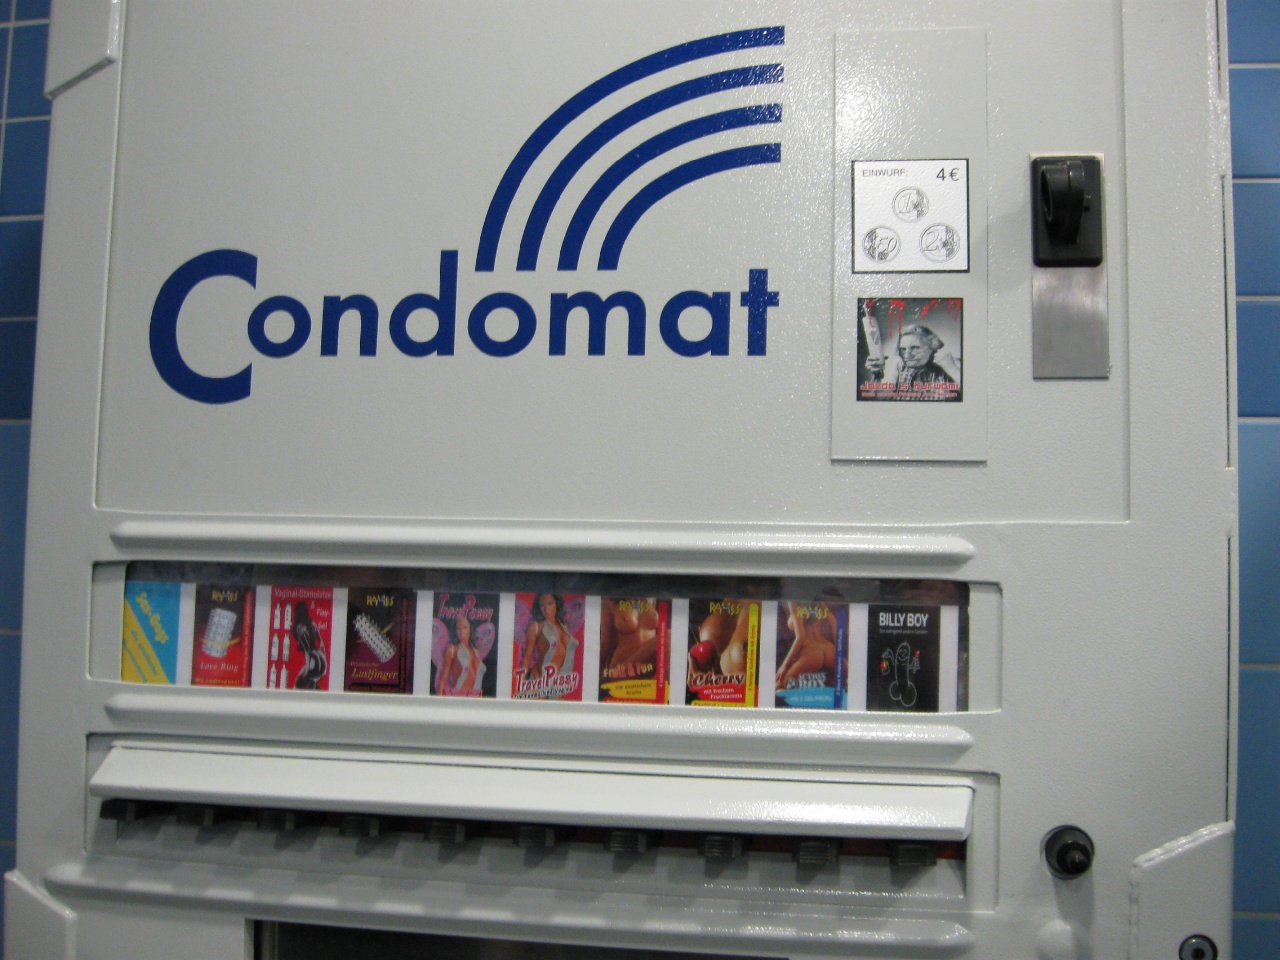 Nähe der kondomautomat in Kondomautomat in